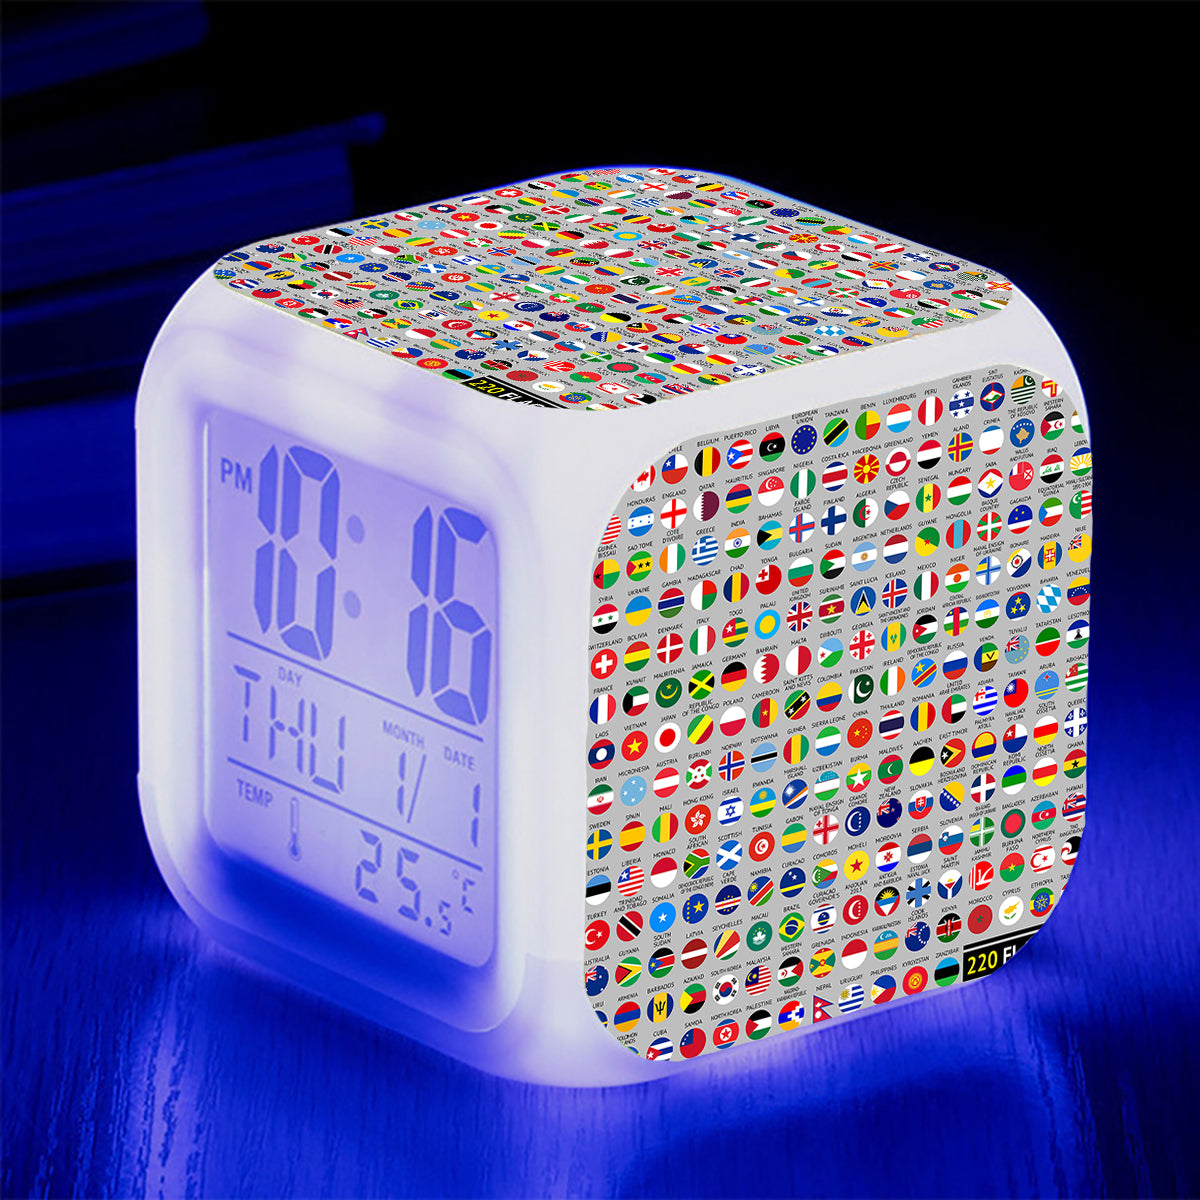 220 World's Flags Designed "7 Colour" Digital Alarm Clock